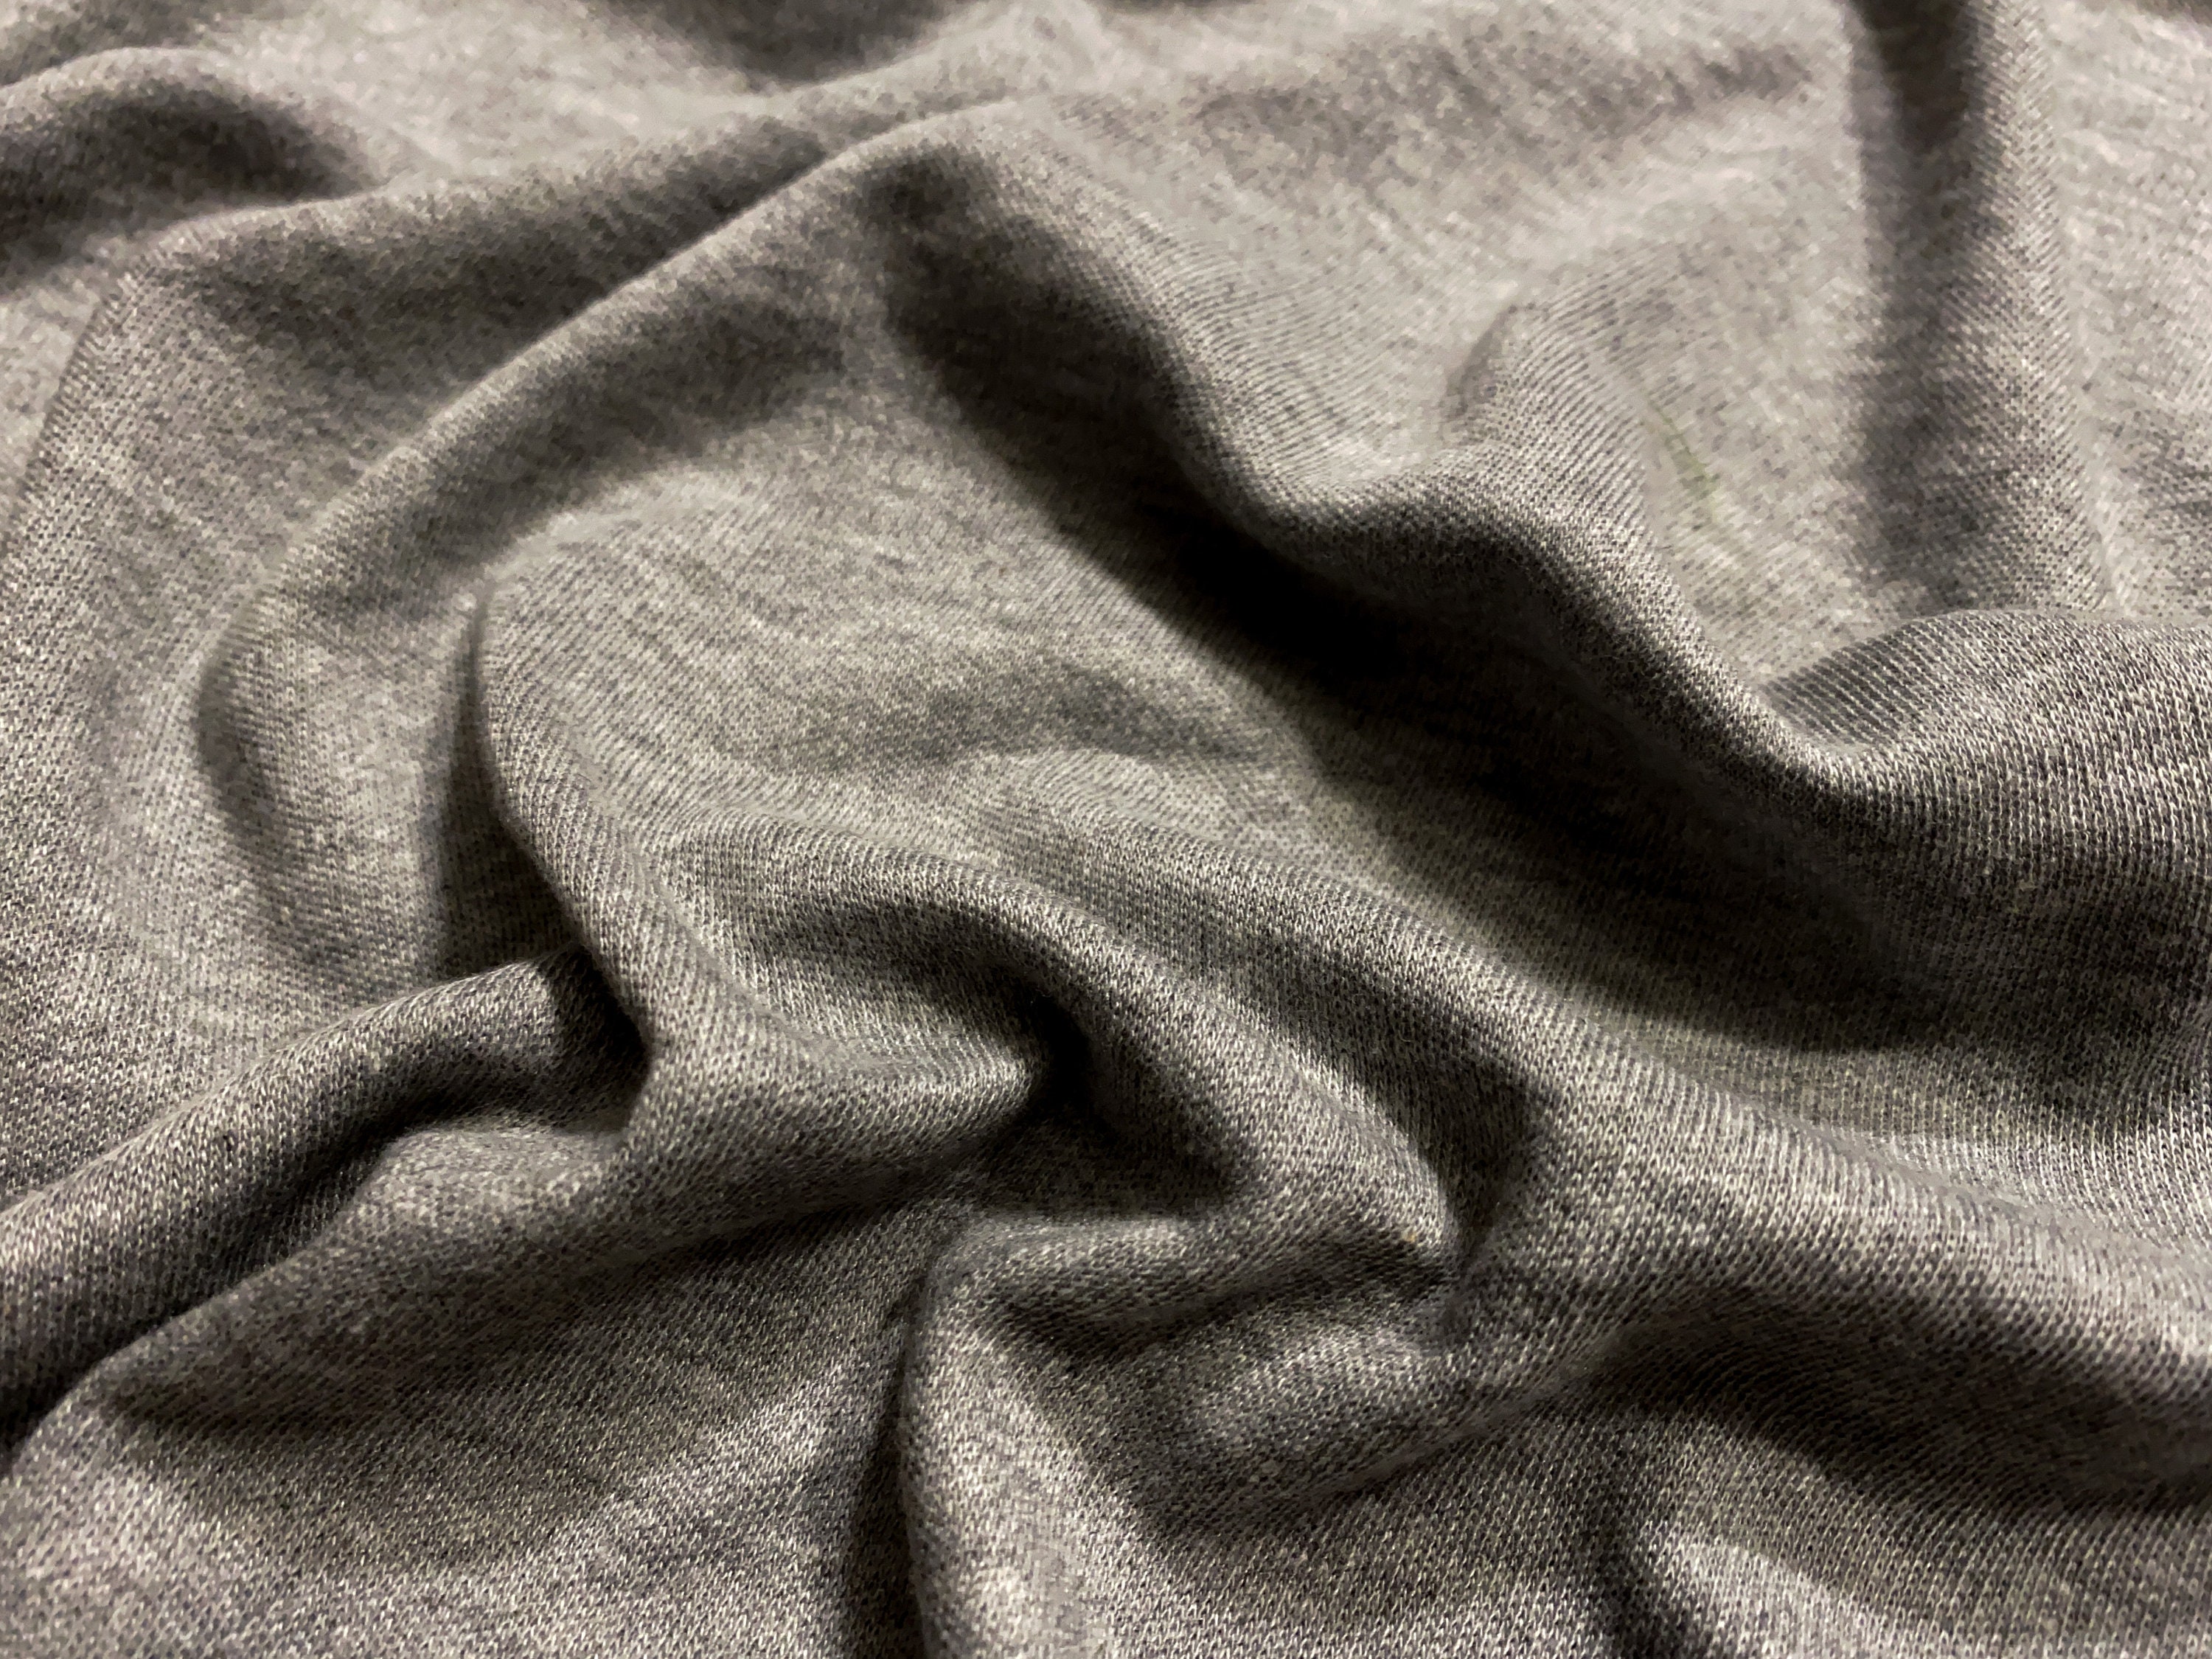 Sand Rayon/Nylon/Lycra Slubbed Ponte Knit 62W > 70% Off Fabric > Fabric Mart